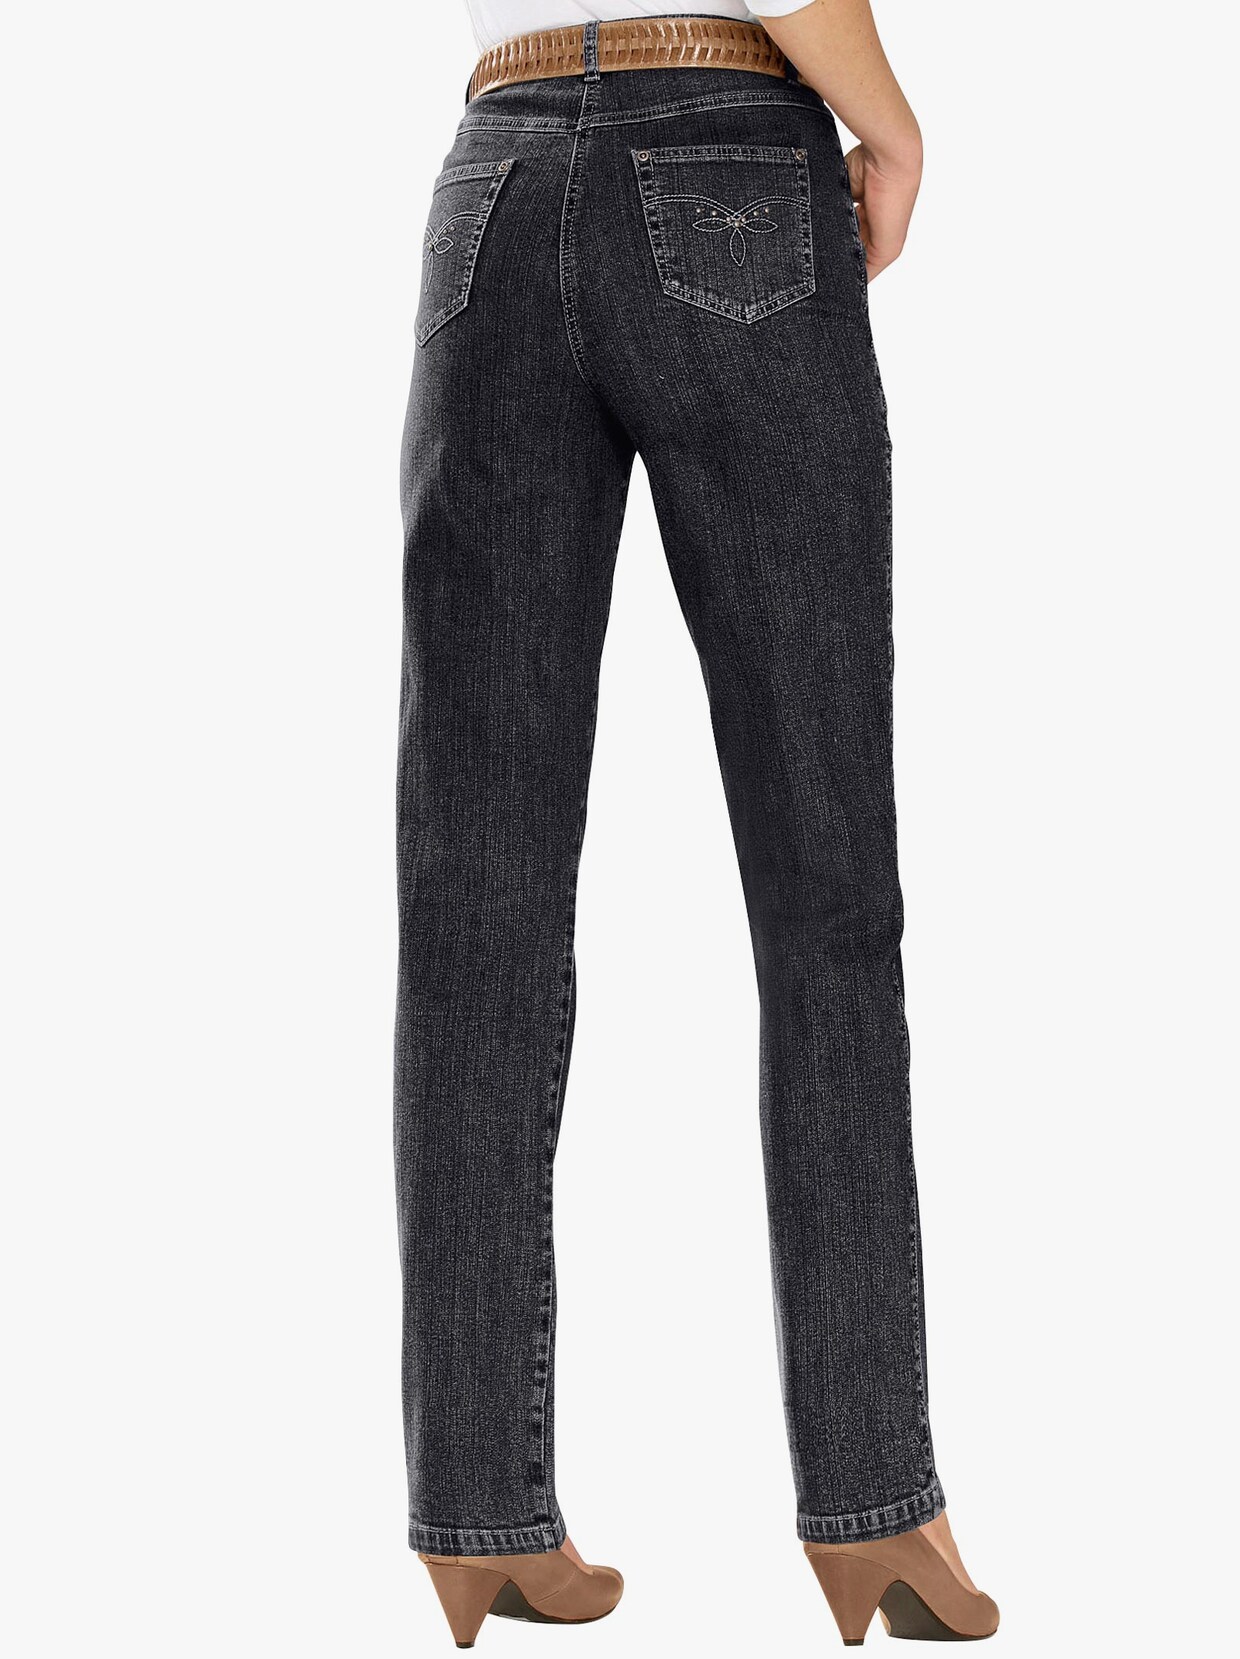 5-ficks jeans - black-denim